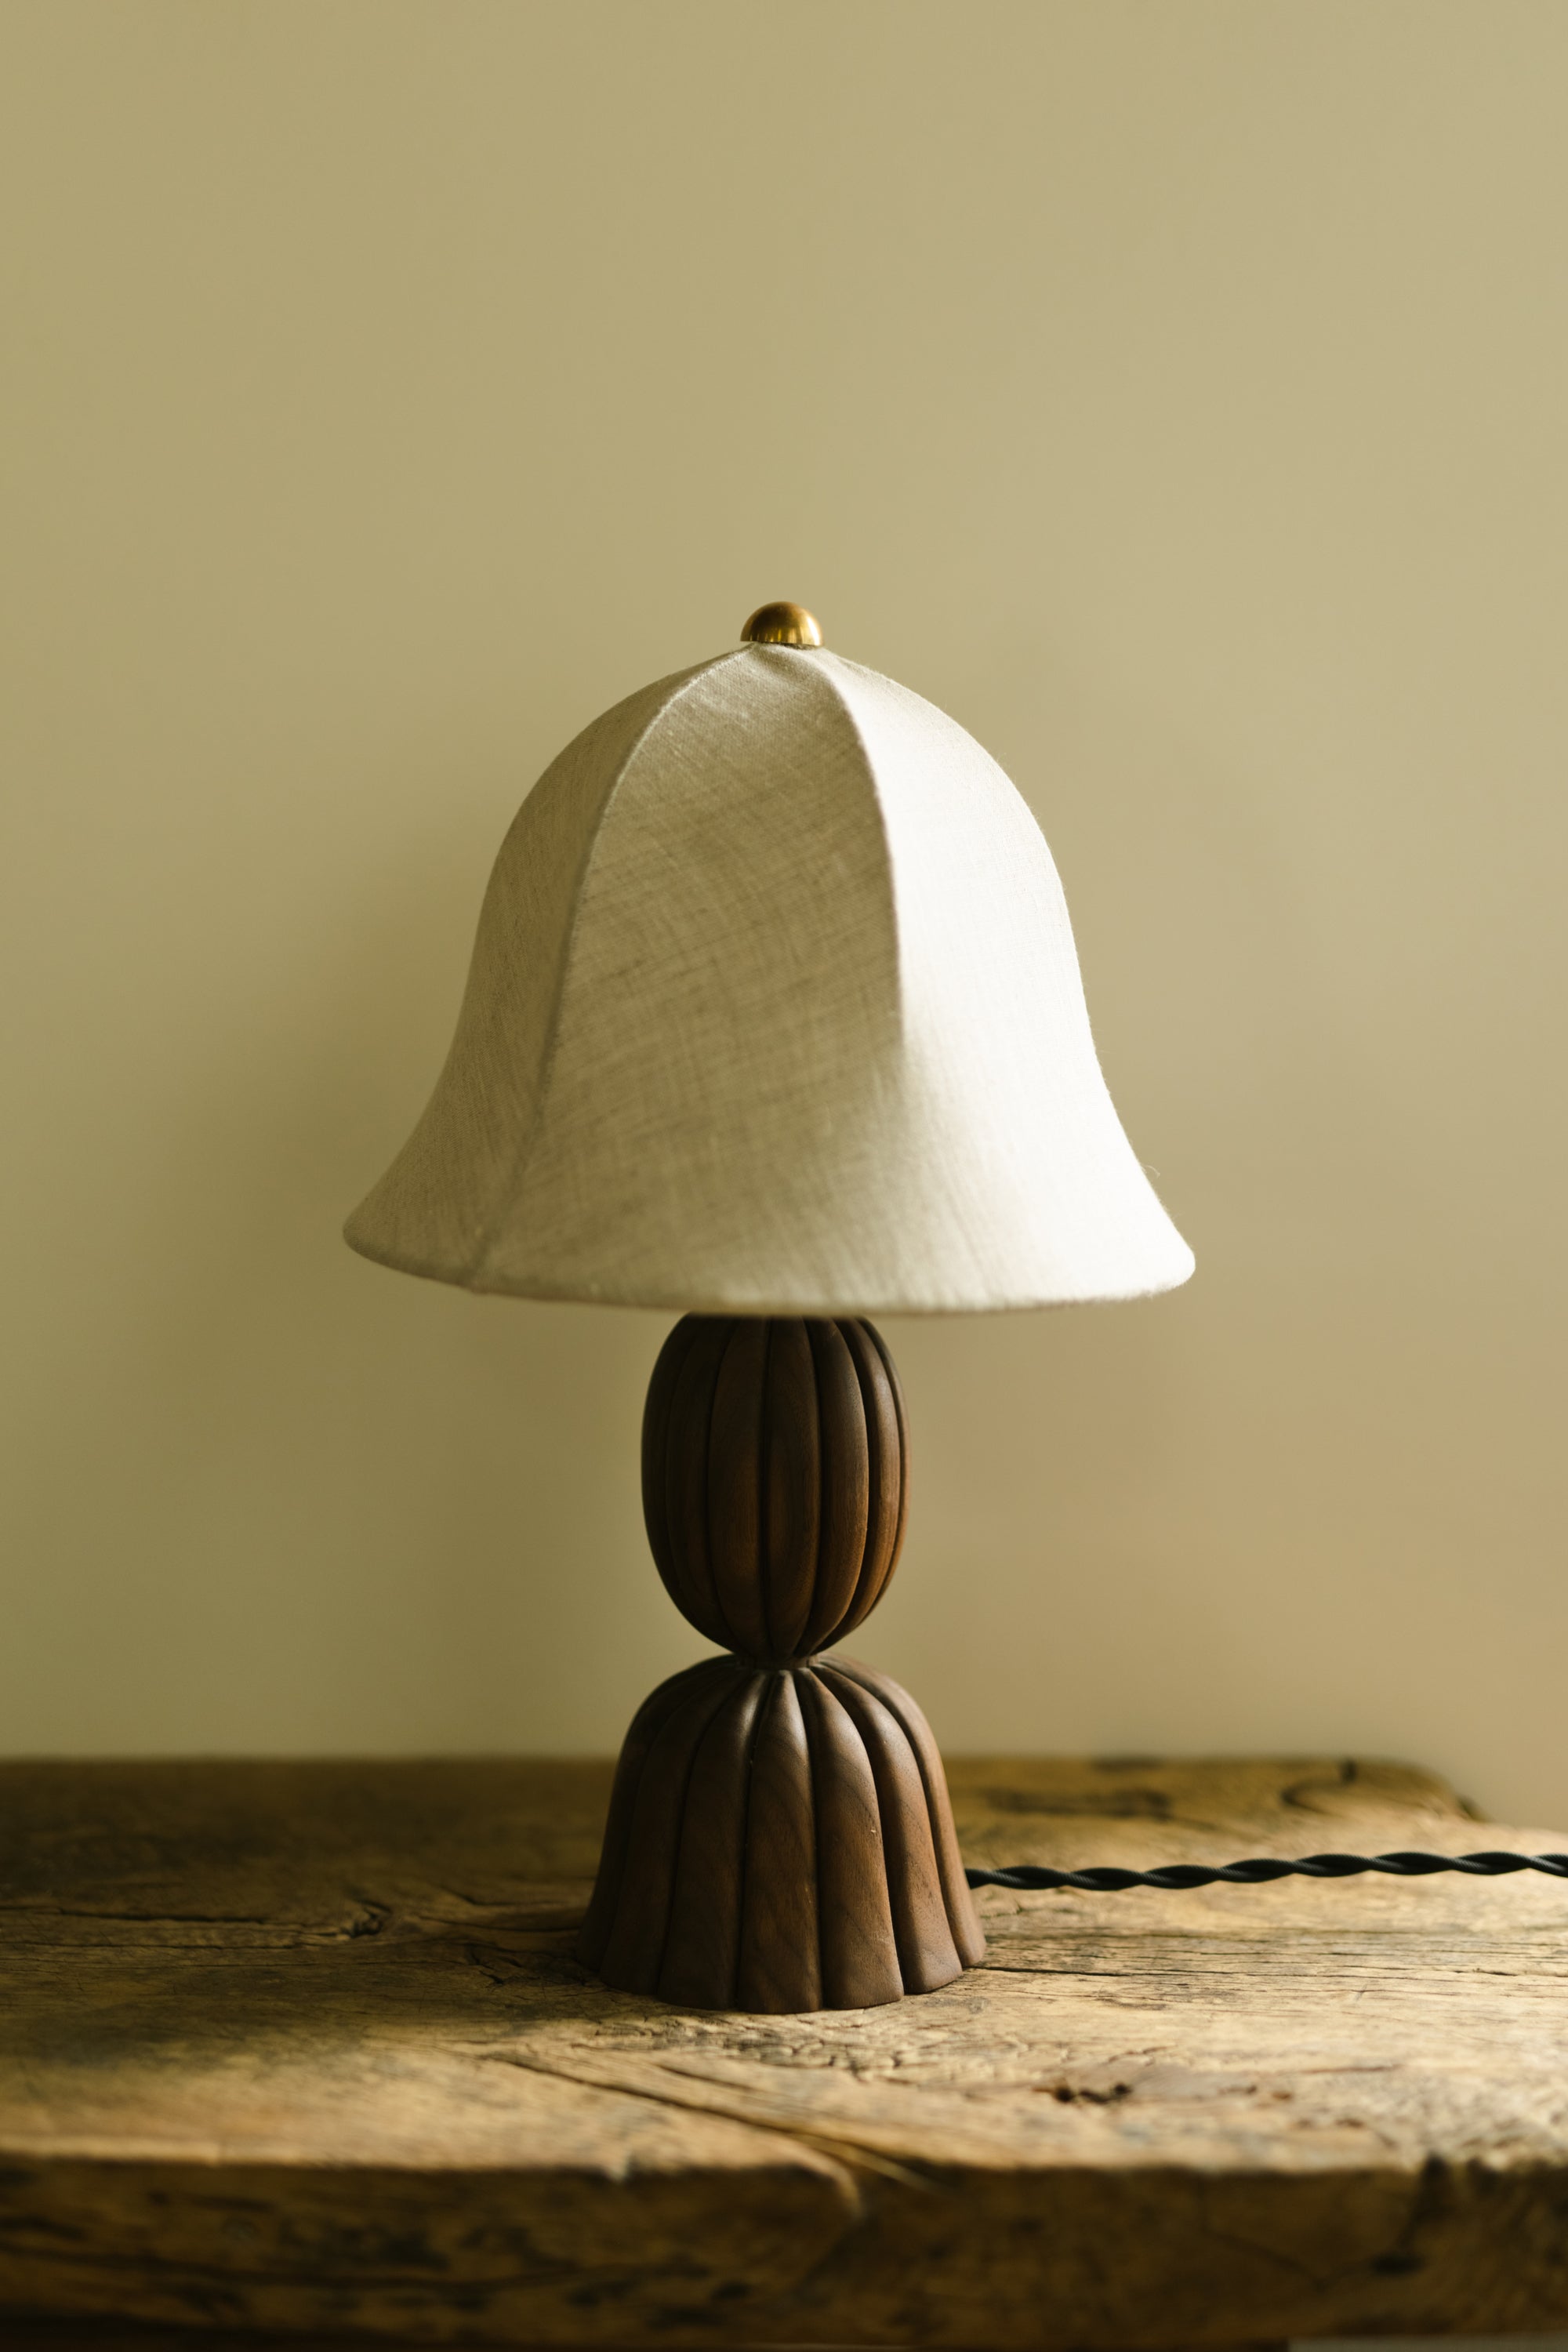 Gwen Table Lamp